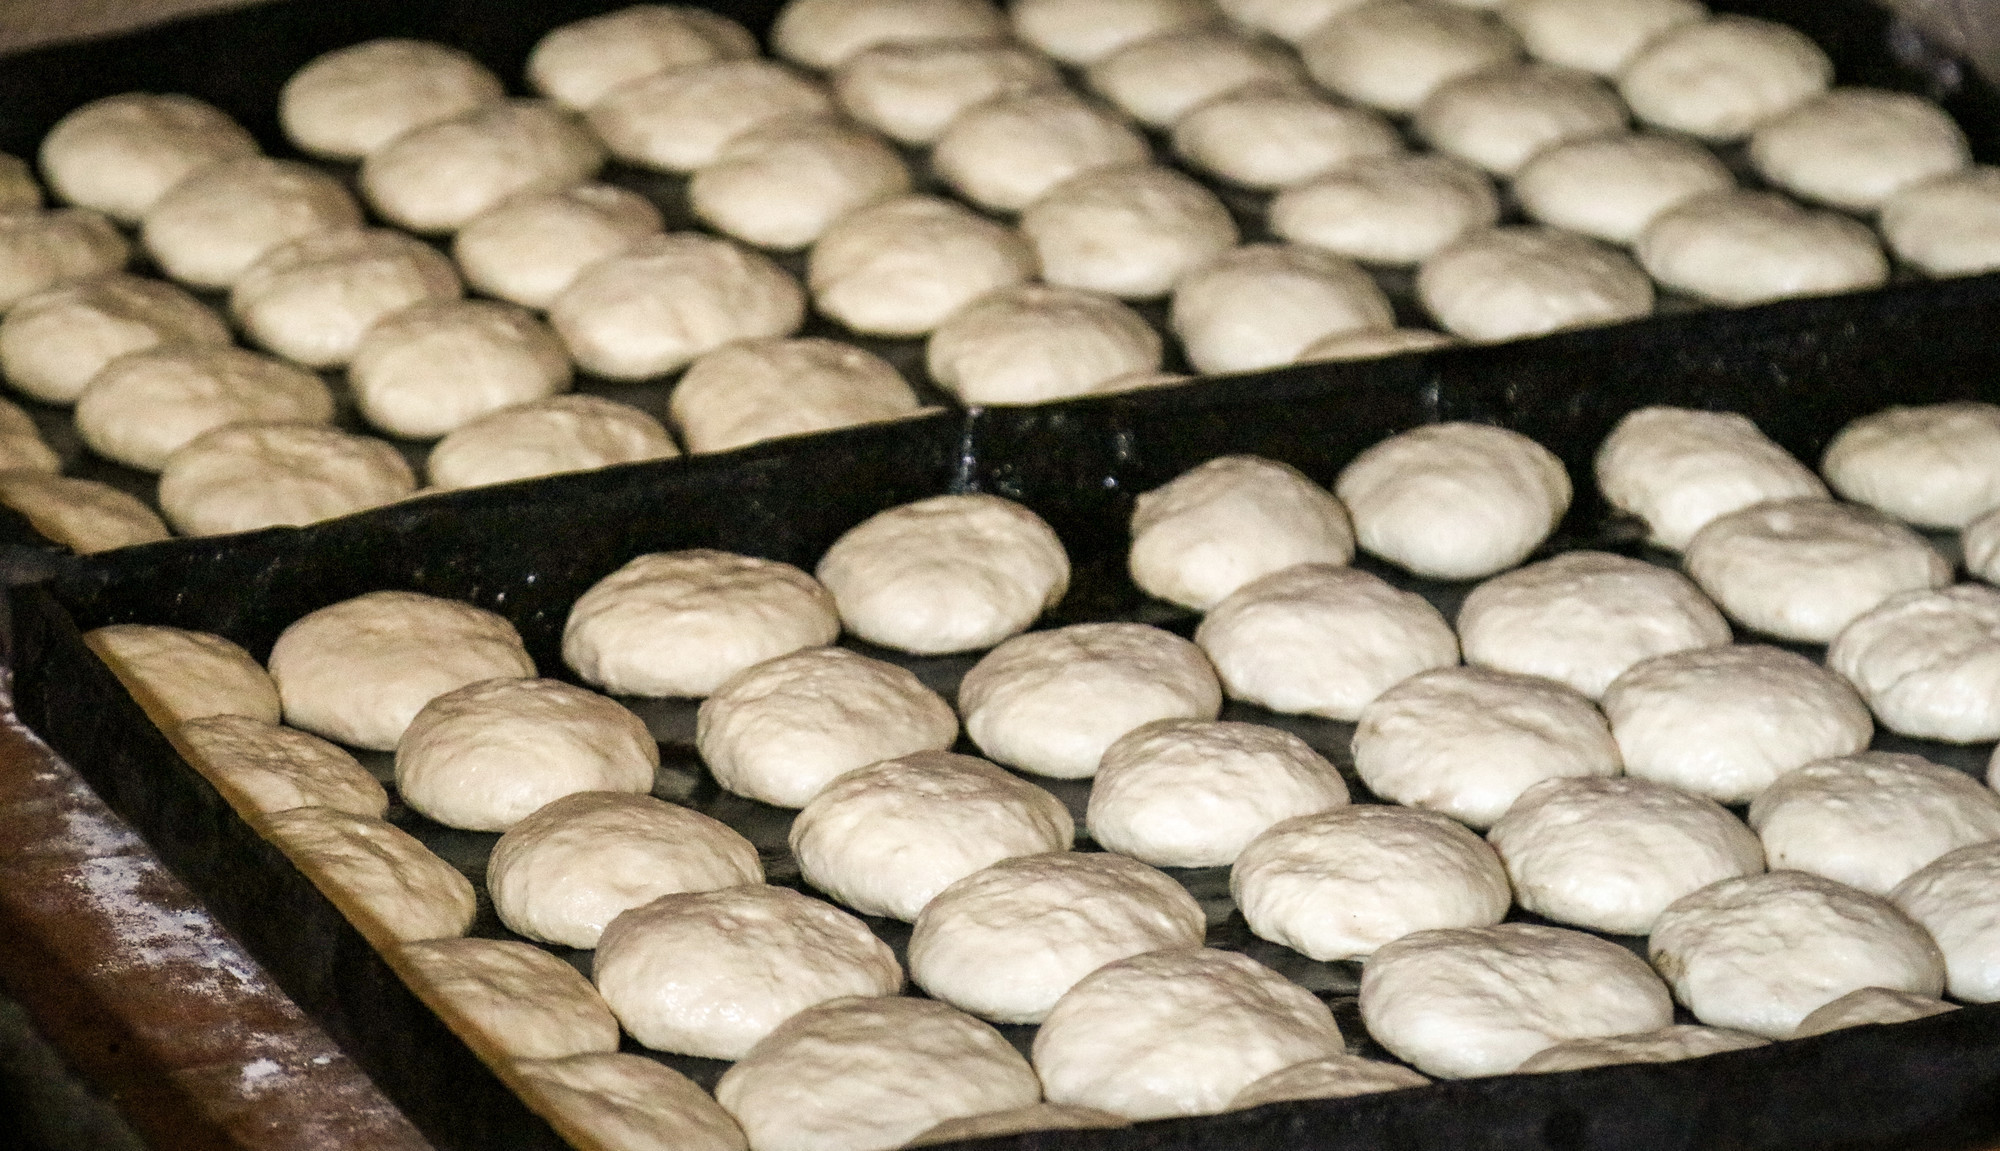 Two large trays of bun dough rising